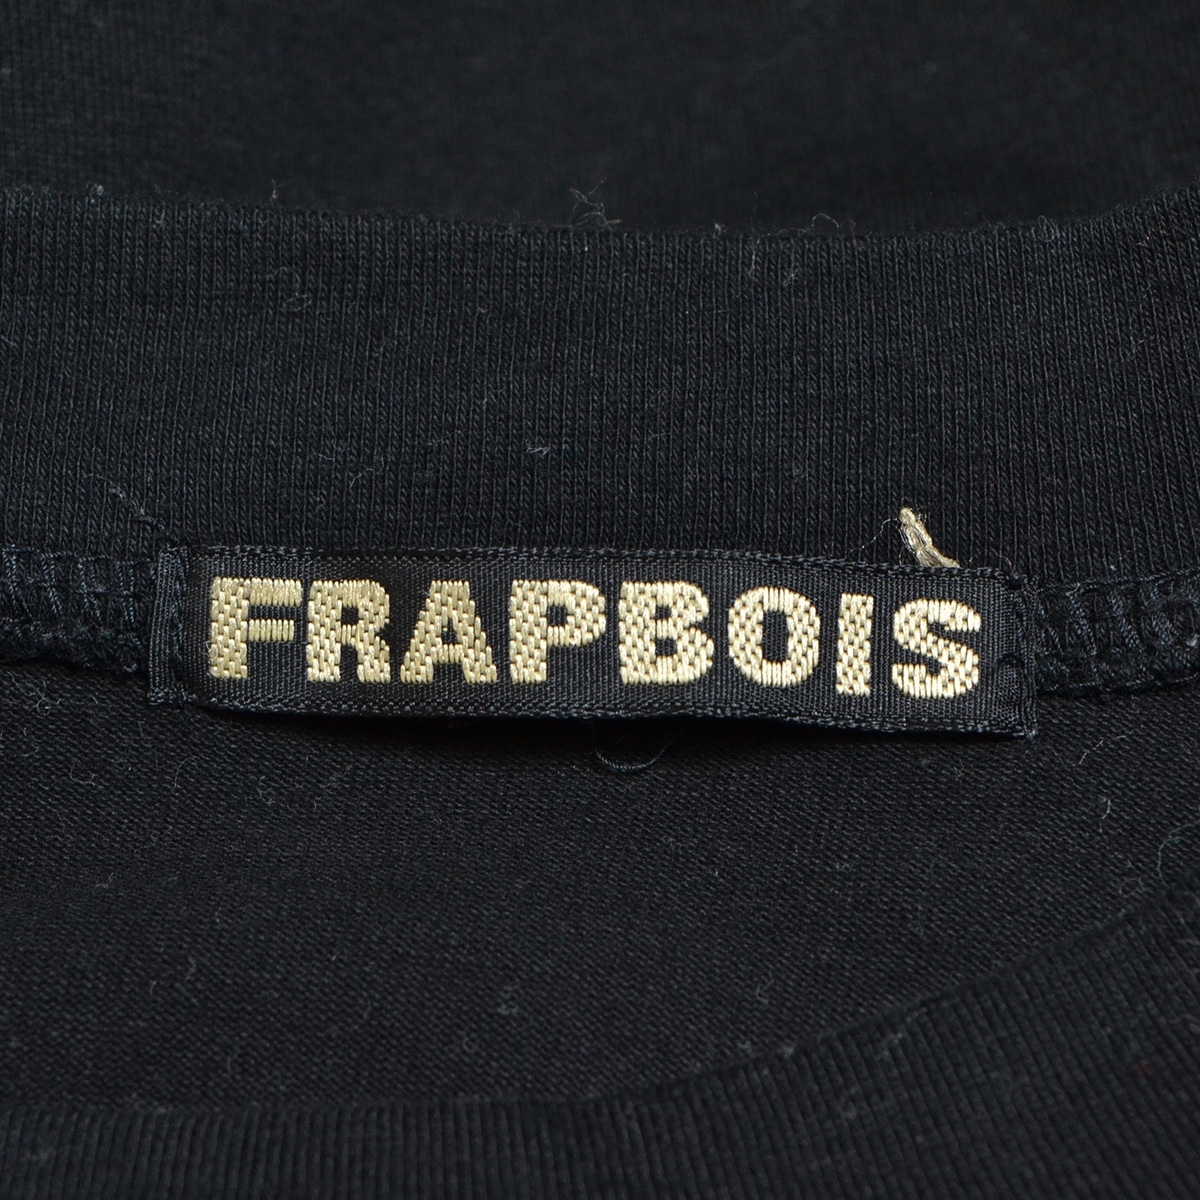 *483969 FRAPBOIS Frapbois Bigi * short sleeves cut and sewn T-shirt unusual material switch color scheme pocket tunic T size 2 lady's black 